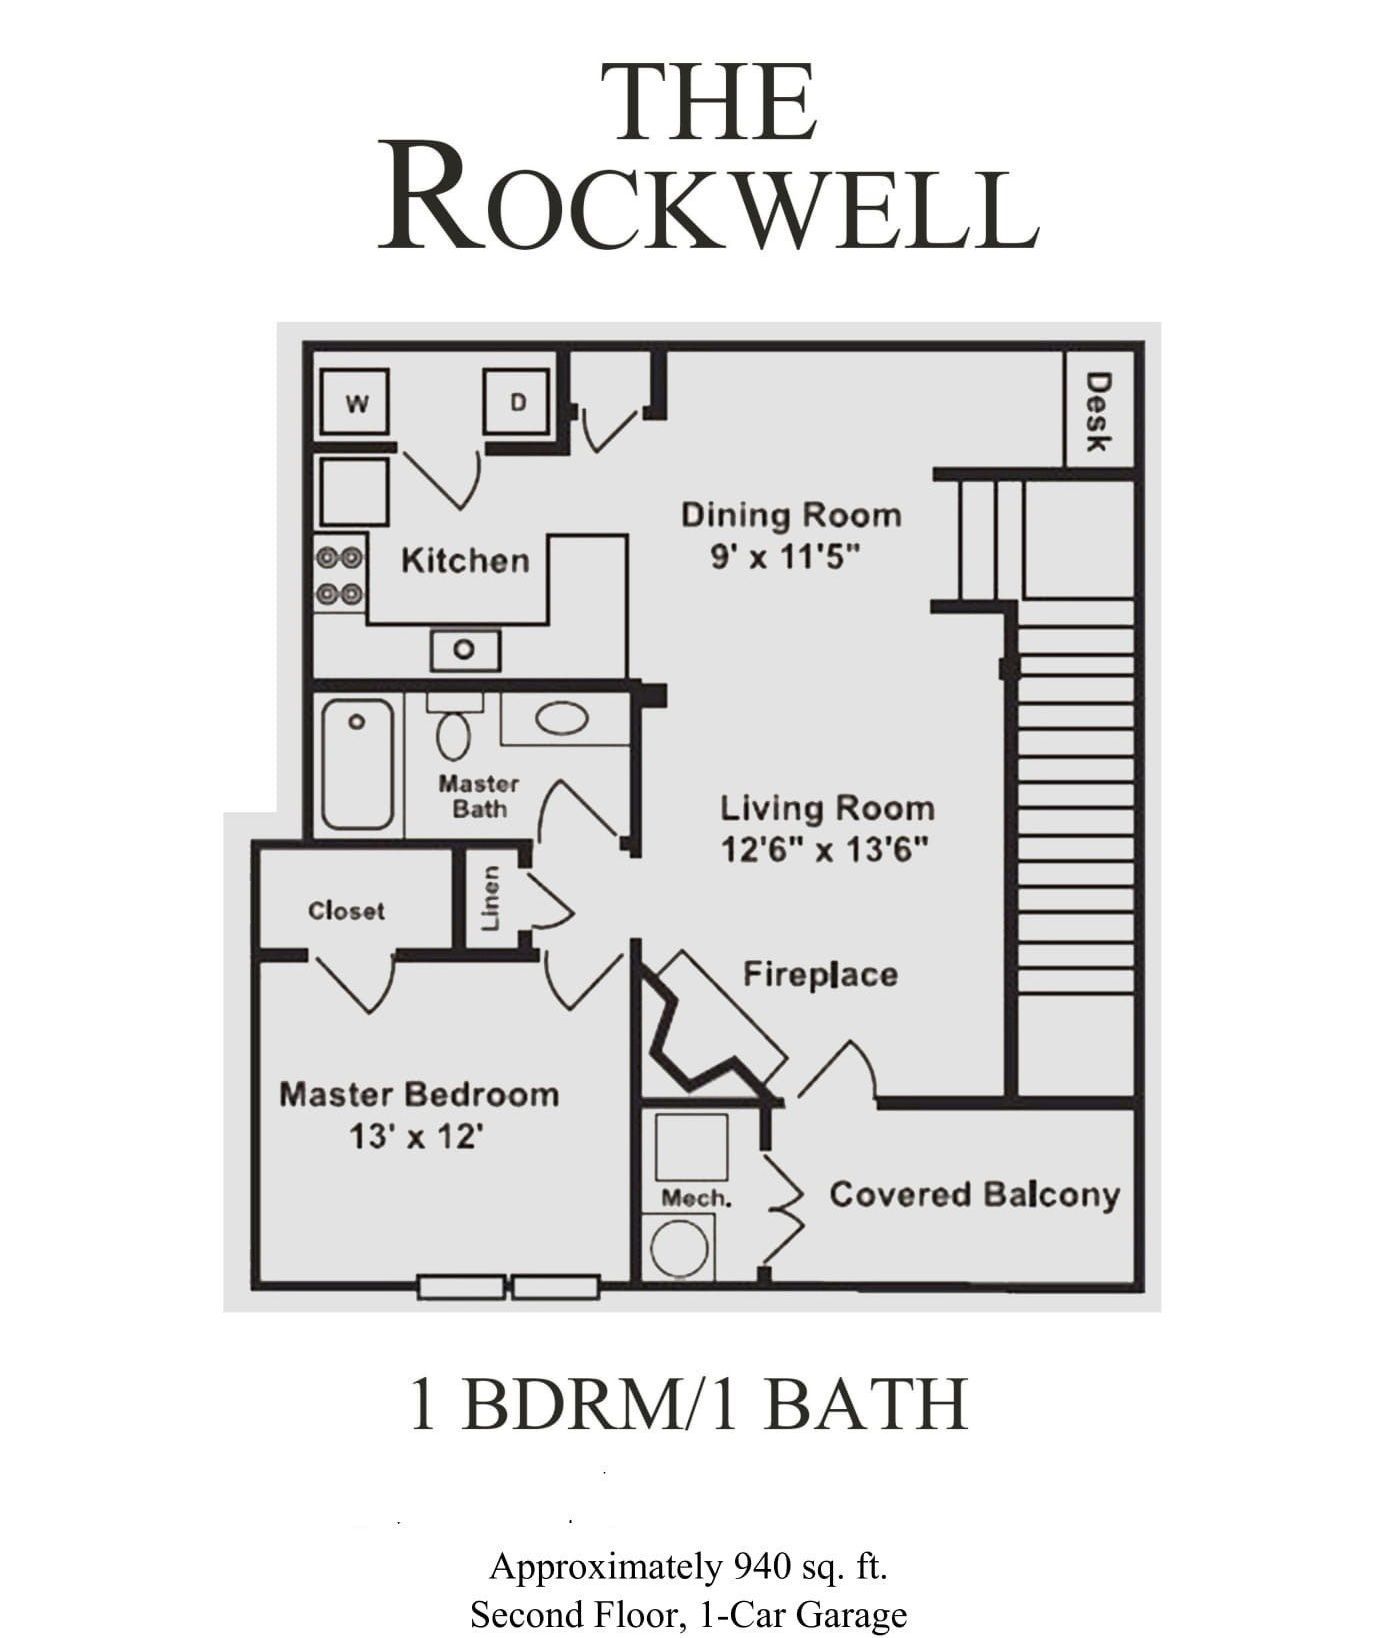 Rockwell floor plan drawing